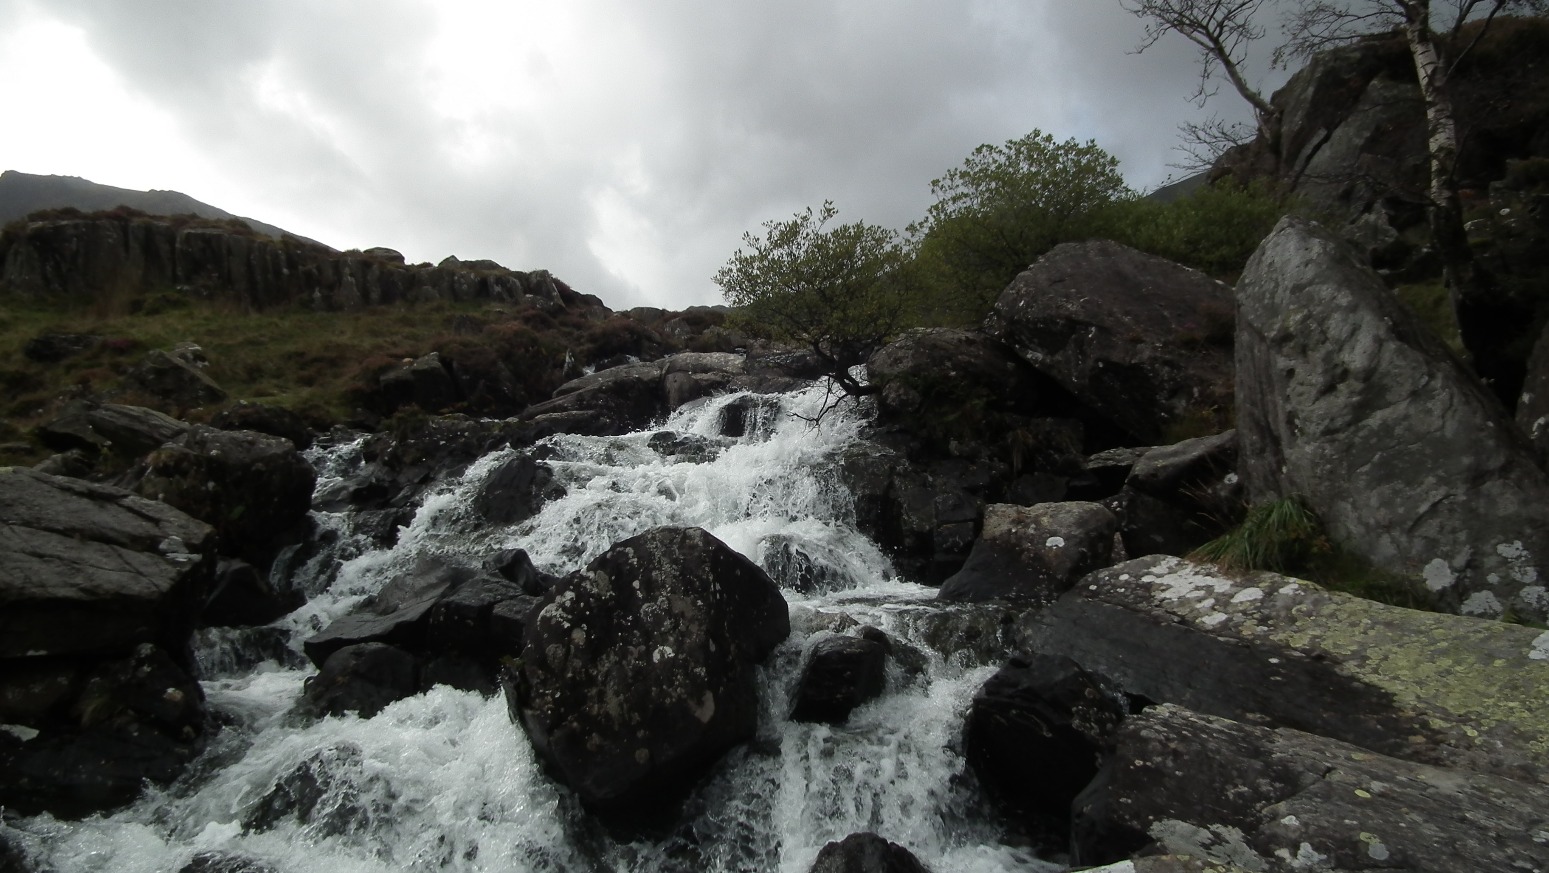 Water Flows, Water | Waterfall | Rain | Wales | Mountain | Weather | River | Stone | Rock | Storm